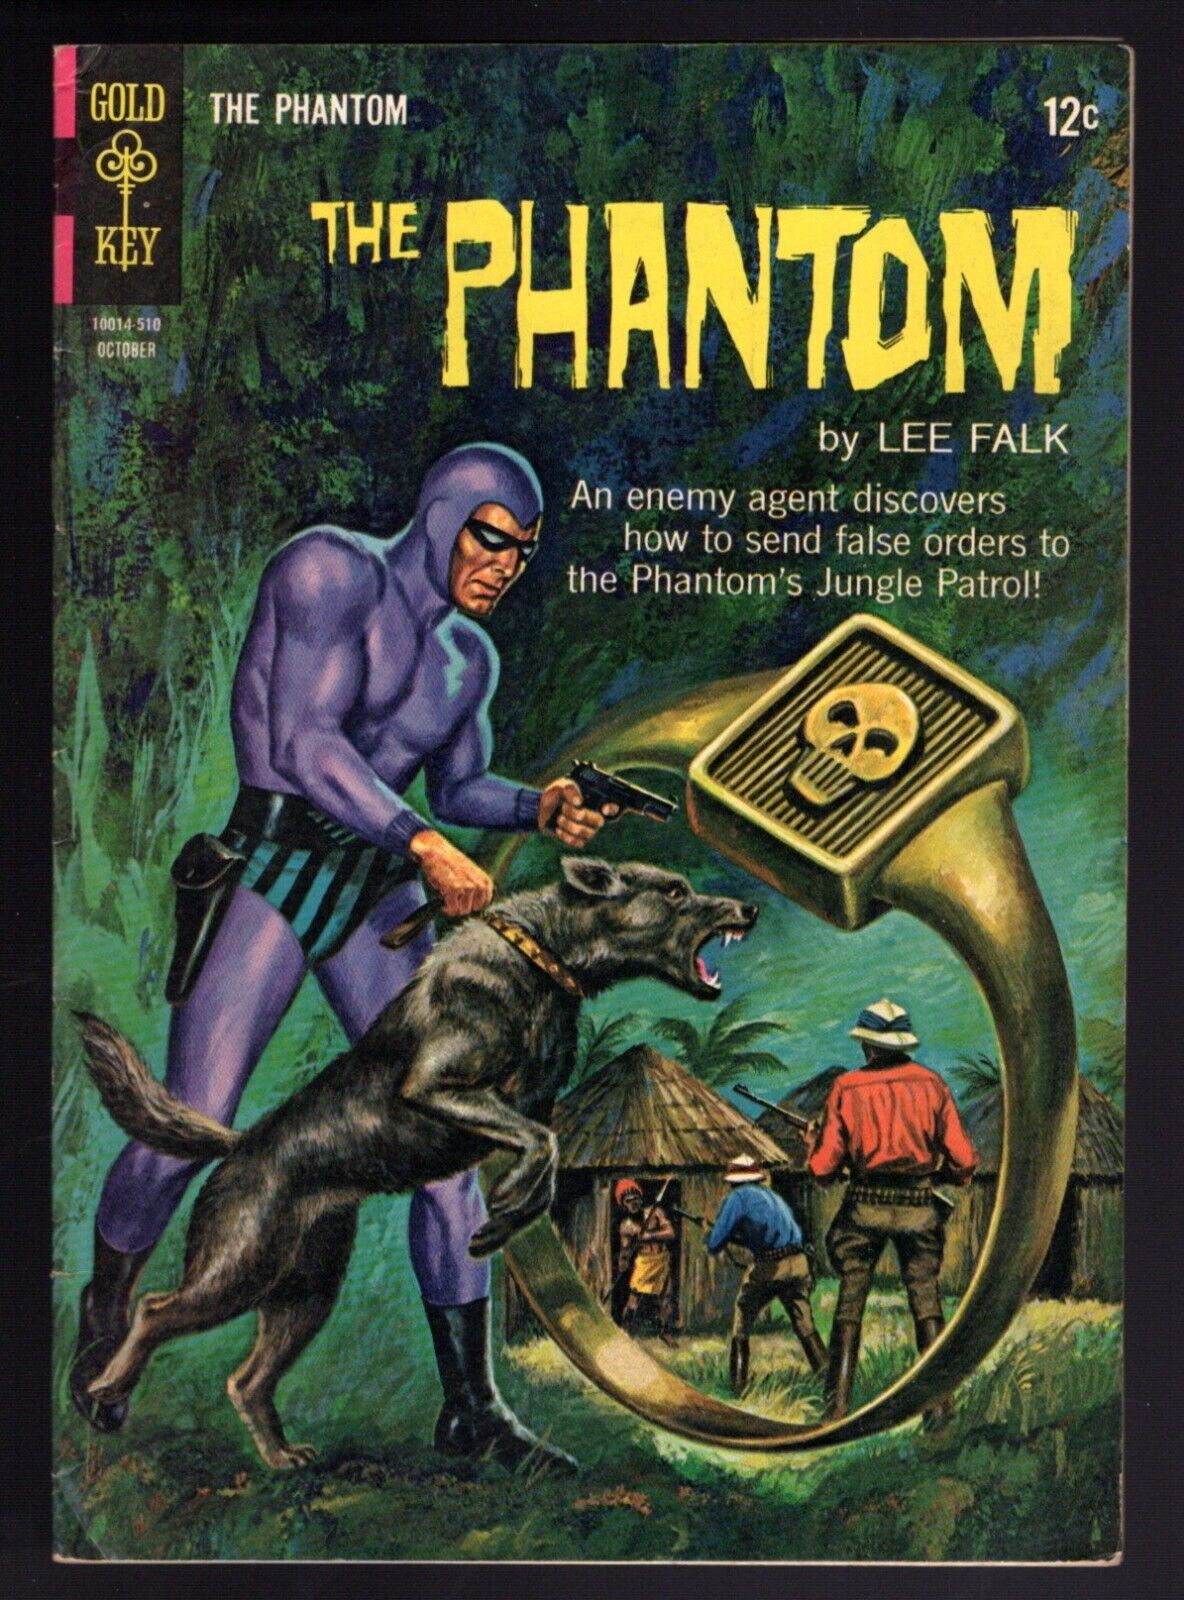 The Phantom #14 Painted Cover, Lee Falk - Glossy Sharp VG+ 1965 Gold Key